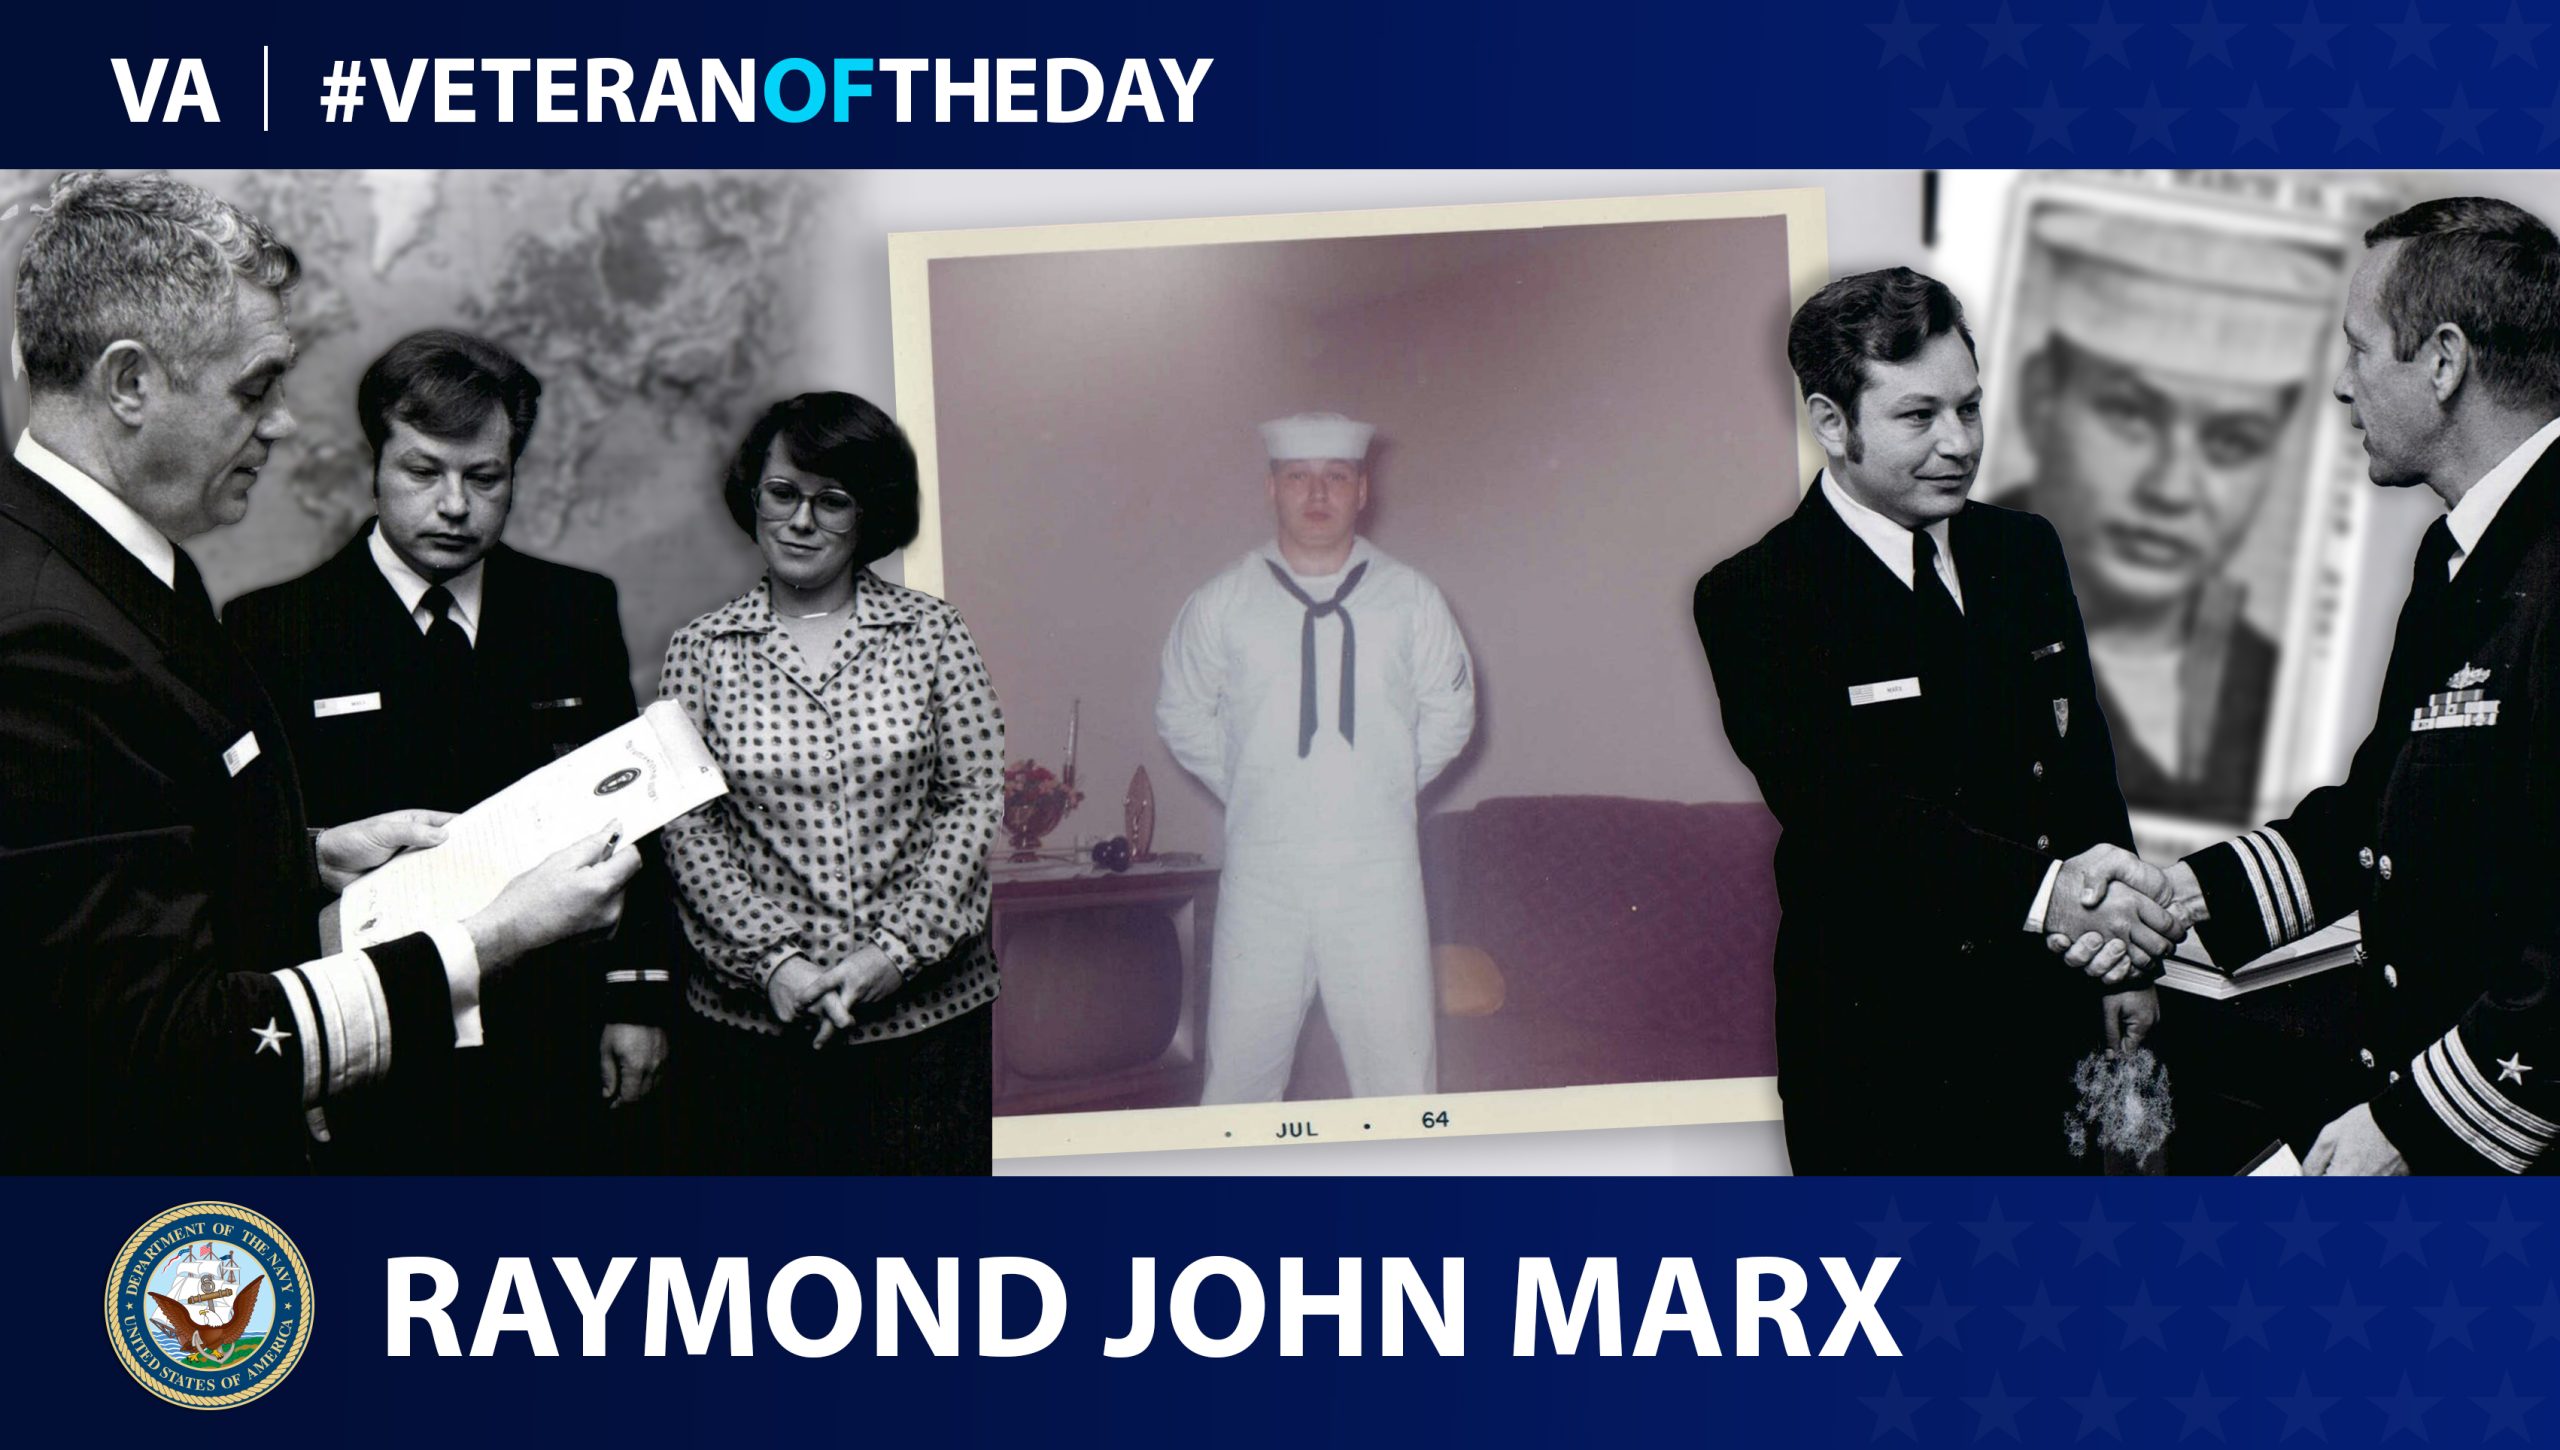 Navy Veteran Raymond John Marx is today’s Veteran of the Day.